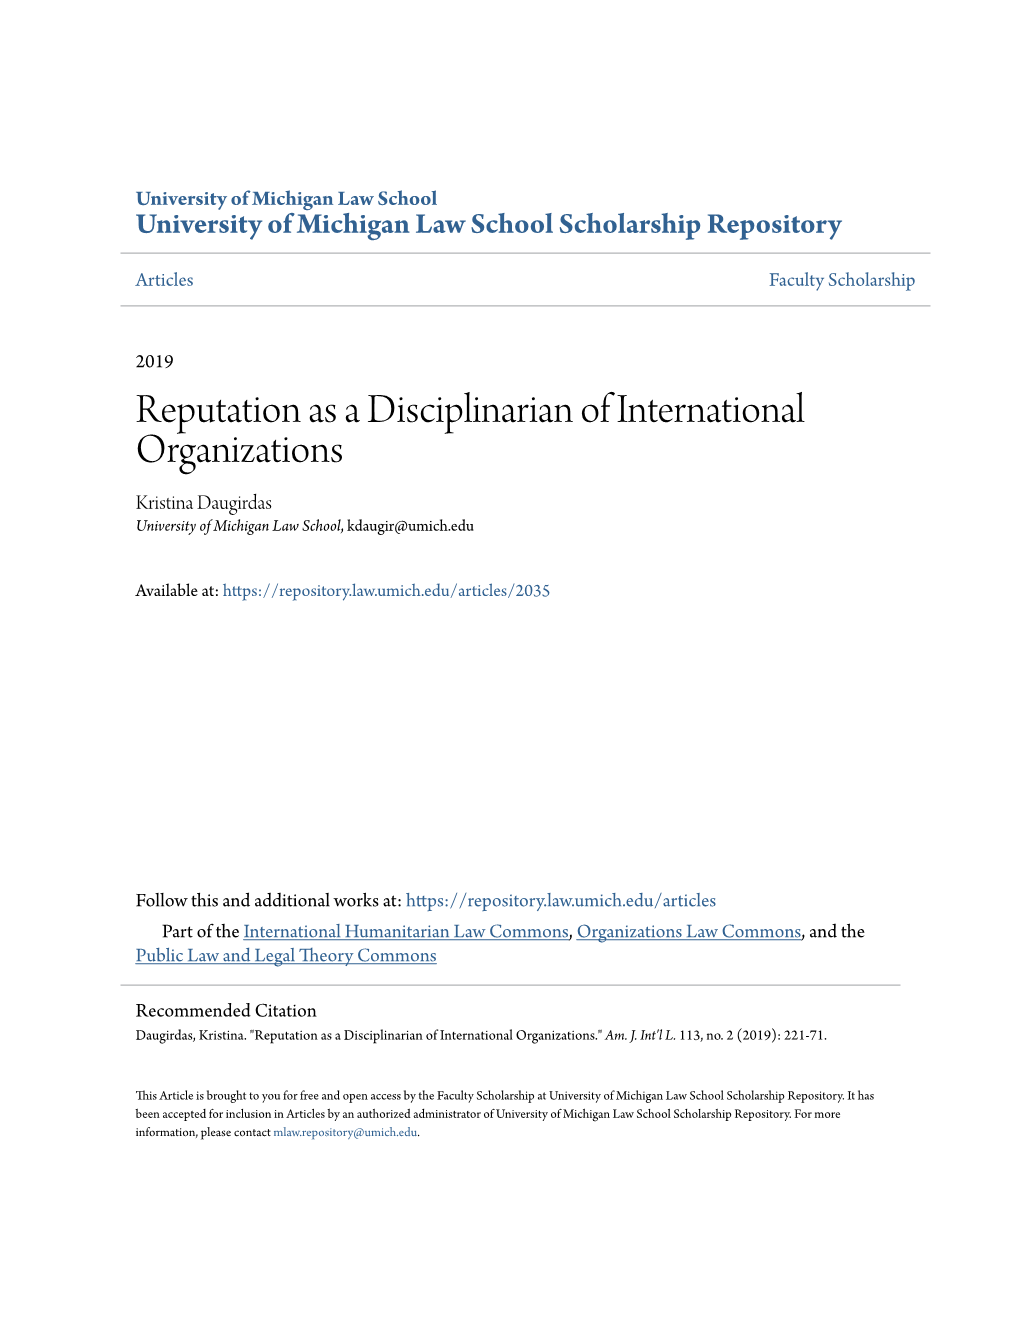 Reputation As a Disciplinarian of International Organizations Kristina Daugirdas University of Michigan Law School, Kdaugir@Umich.Edu